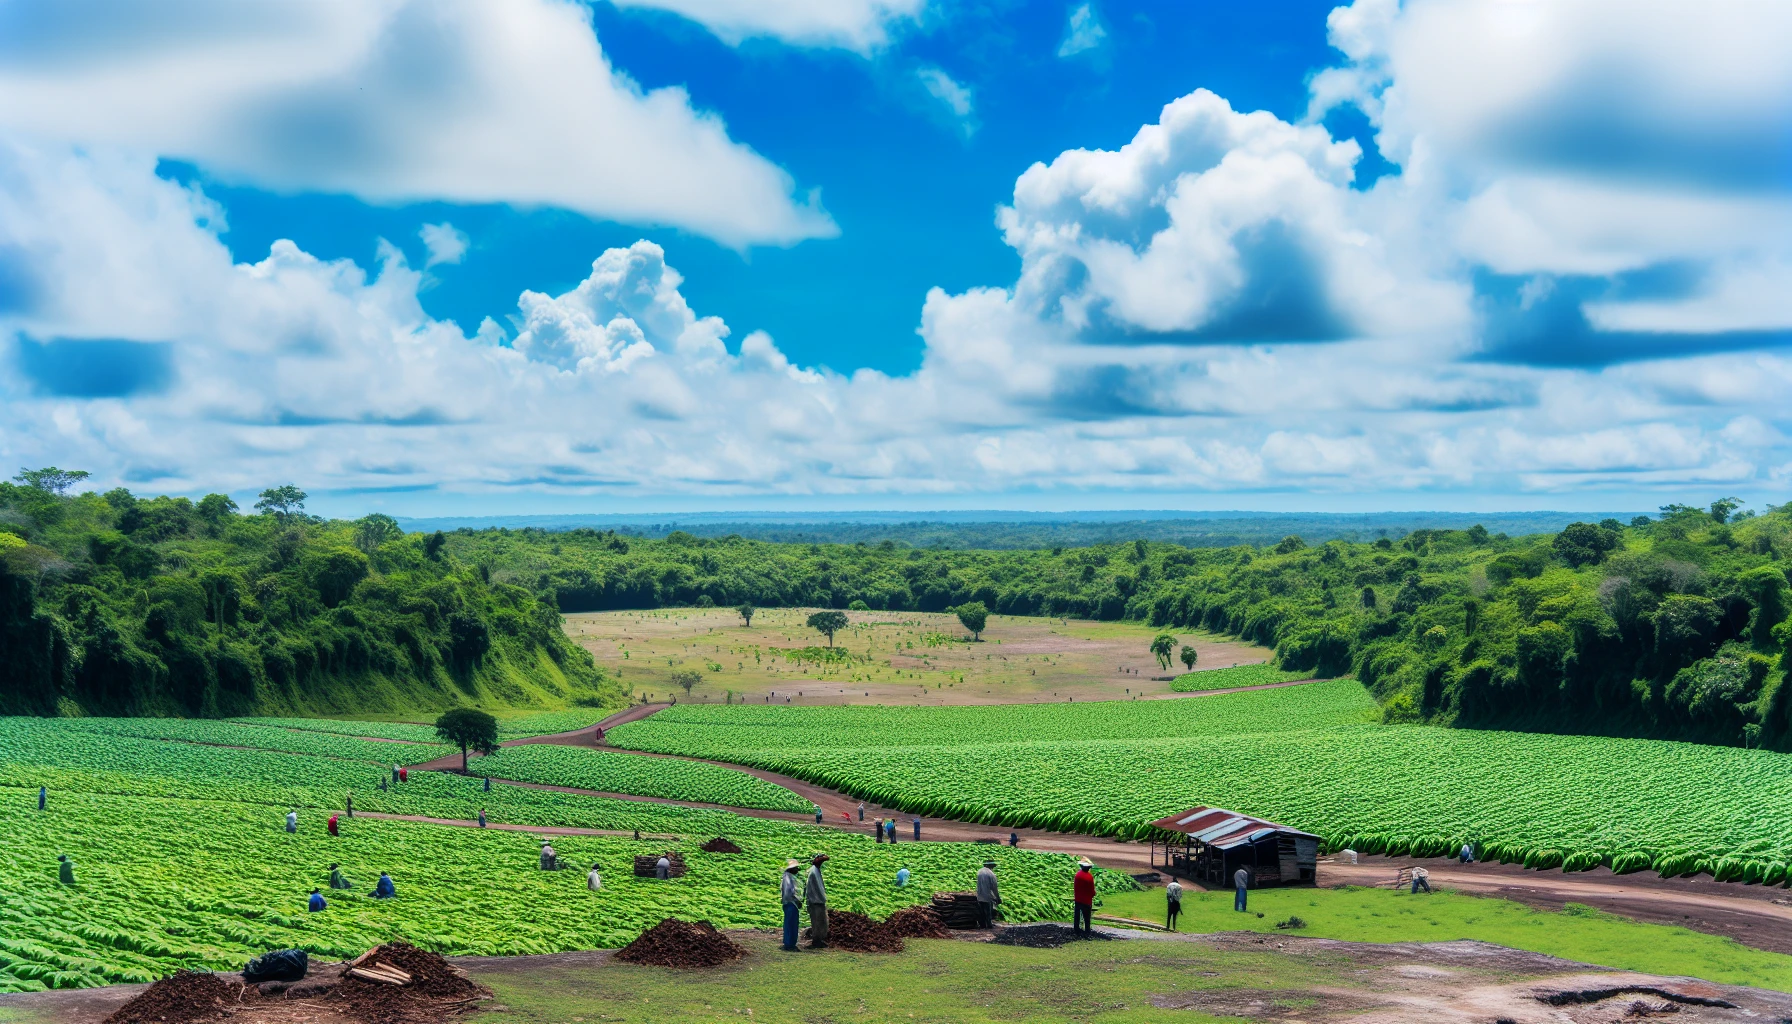 Nicaraguan tobacco fields